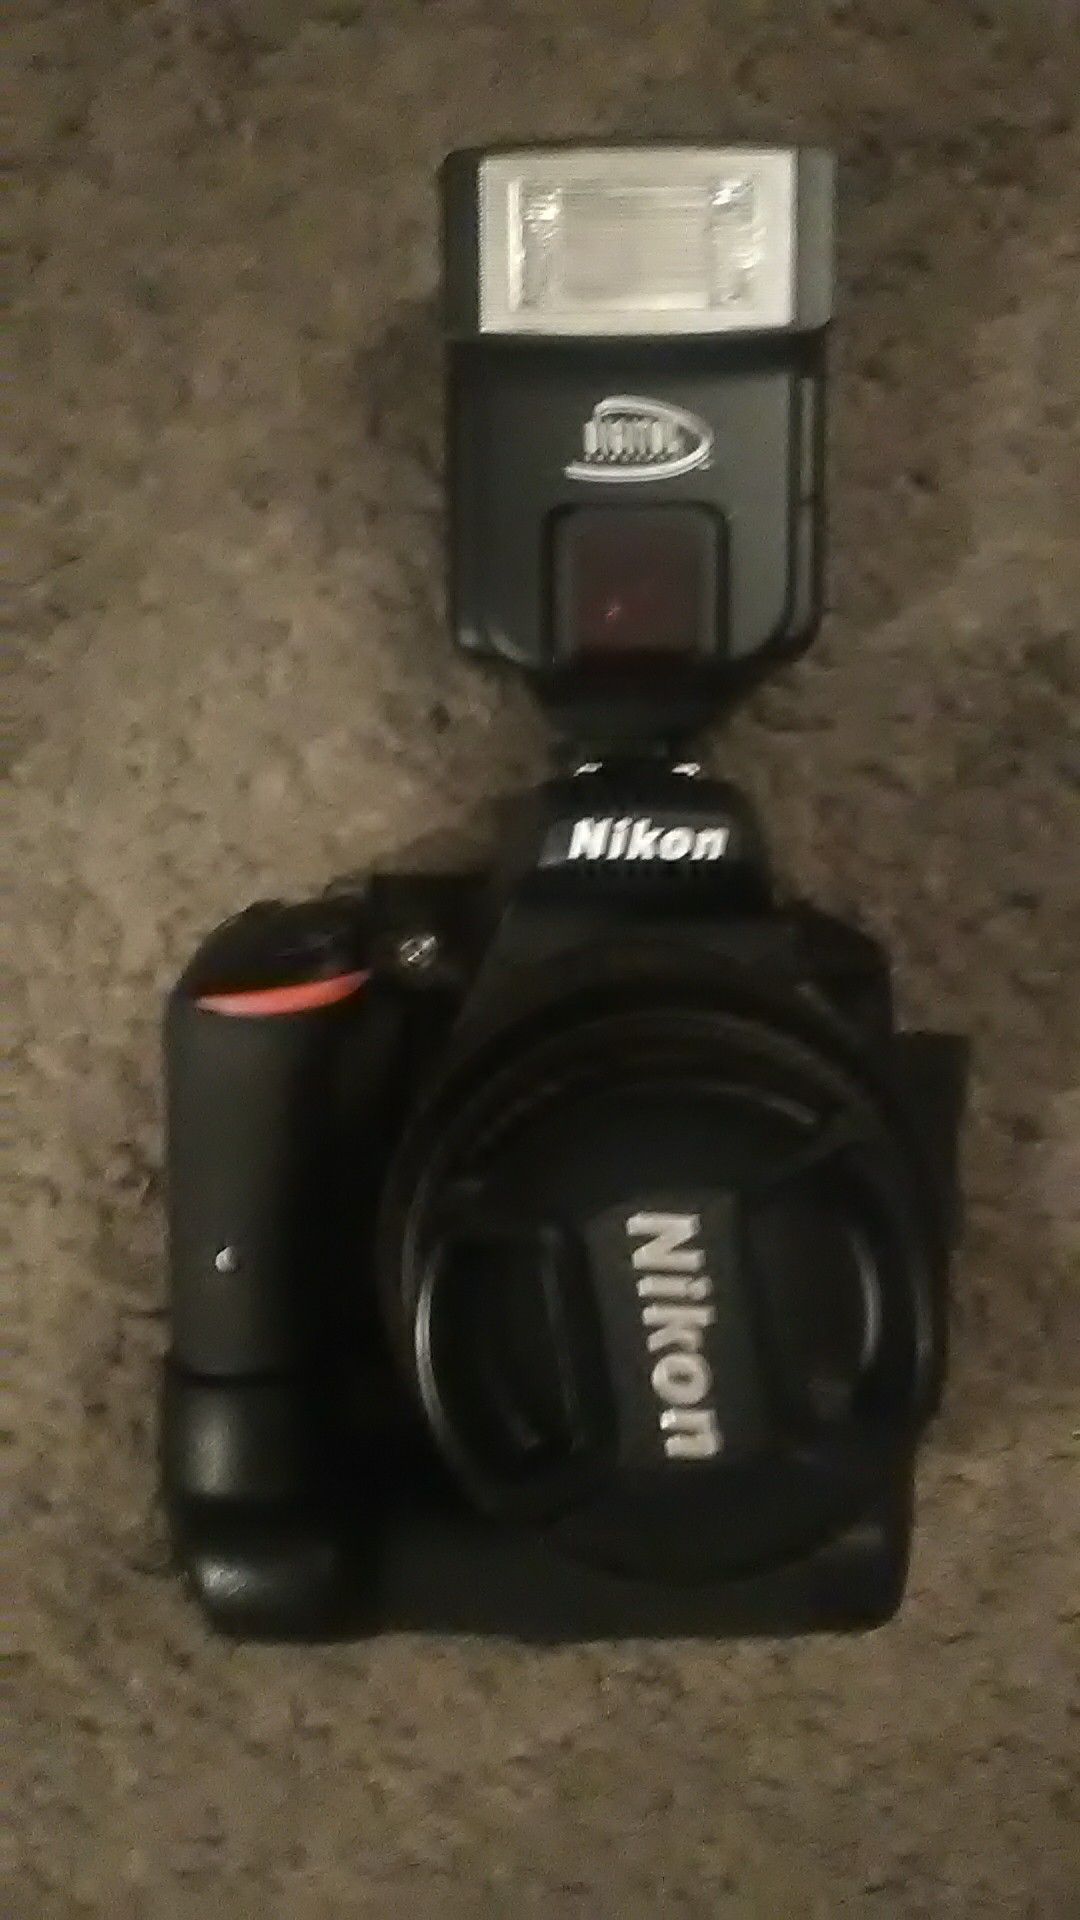 Nikon D5500 digital camera